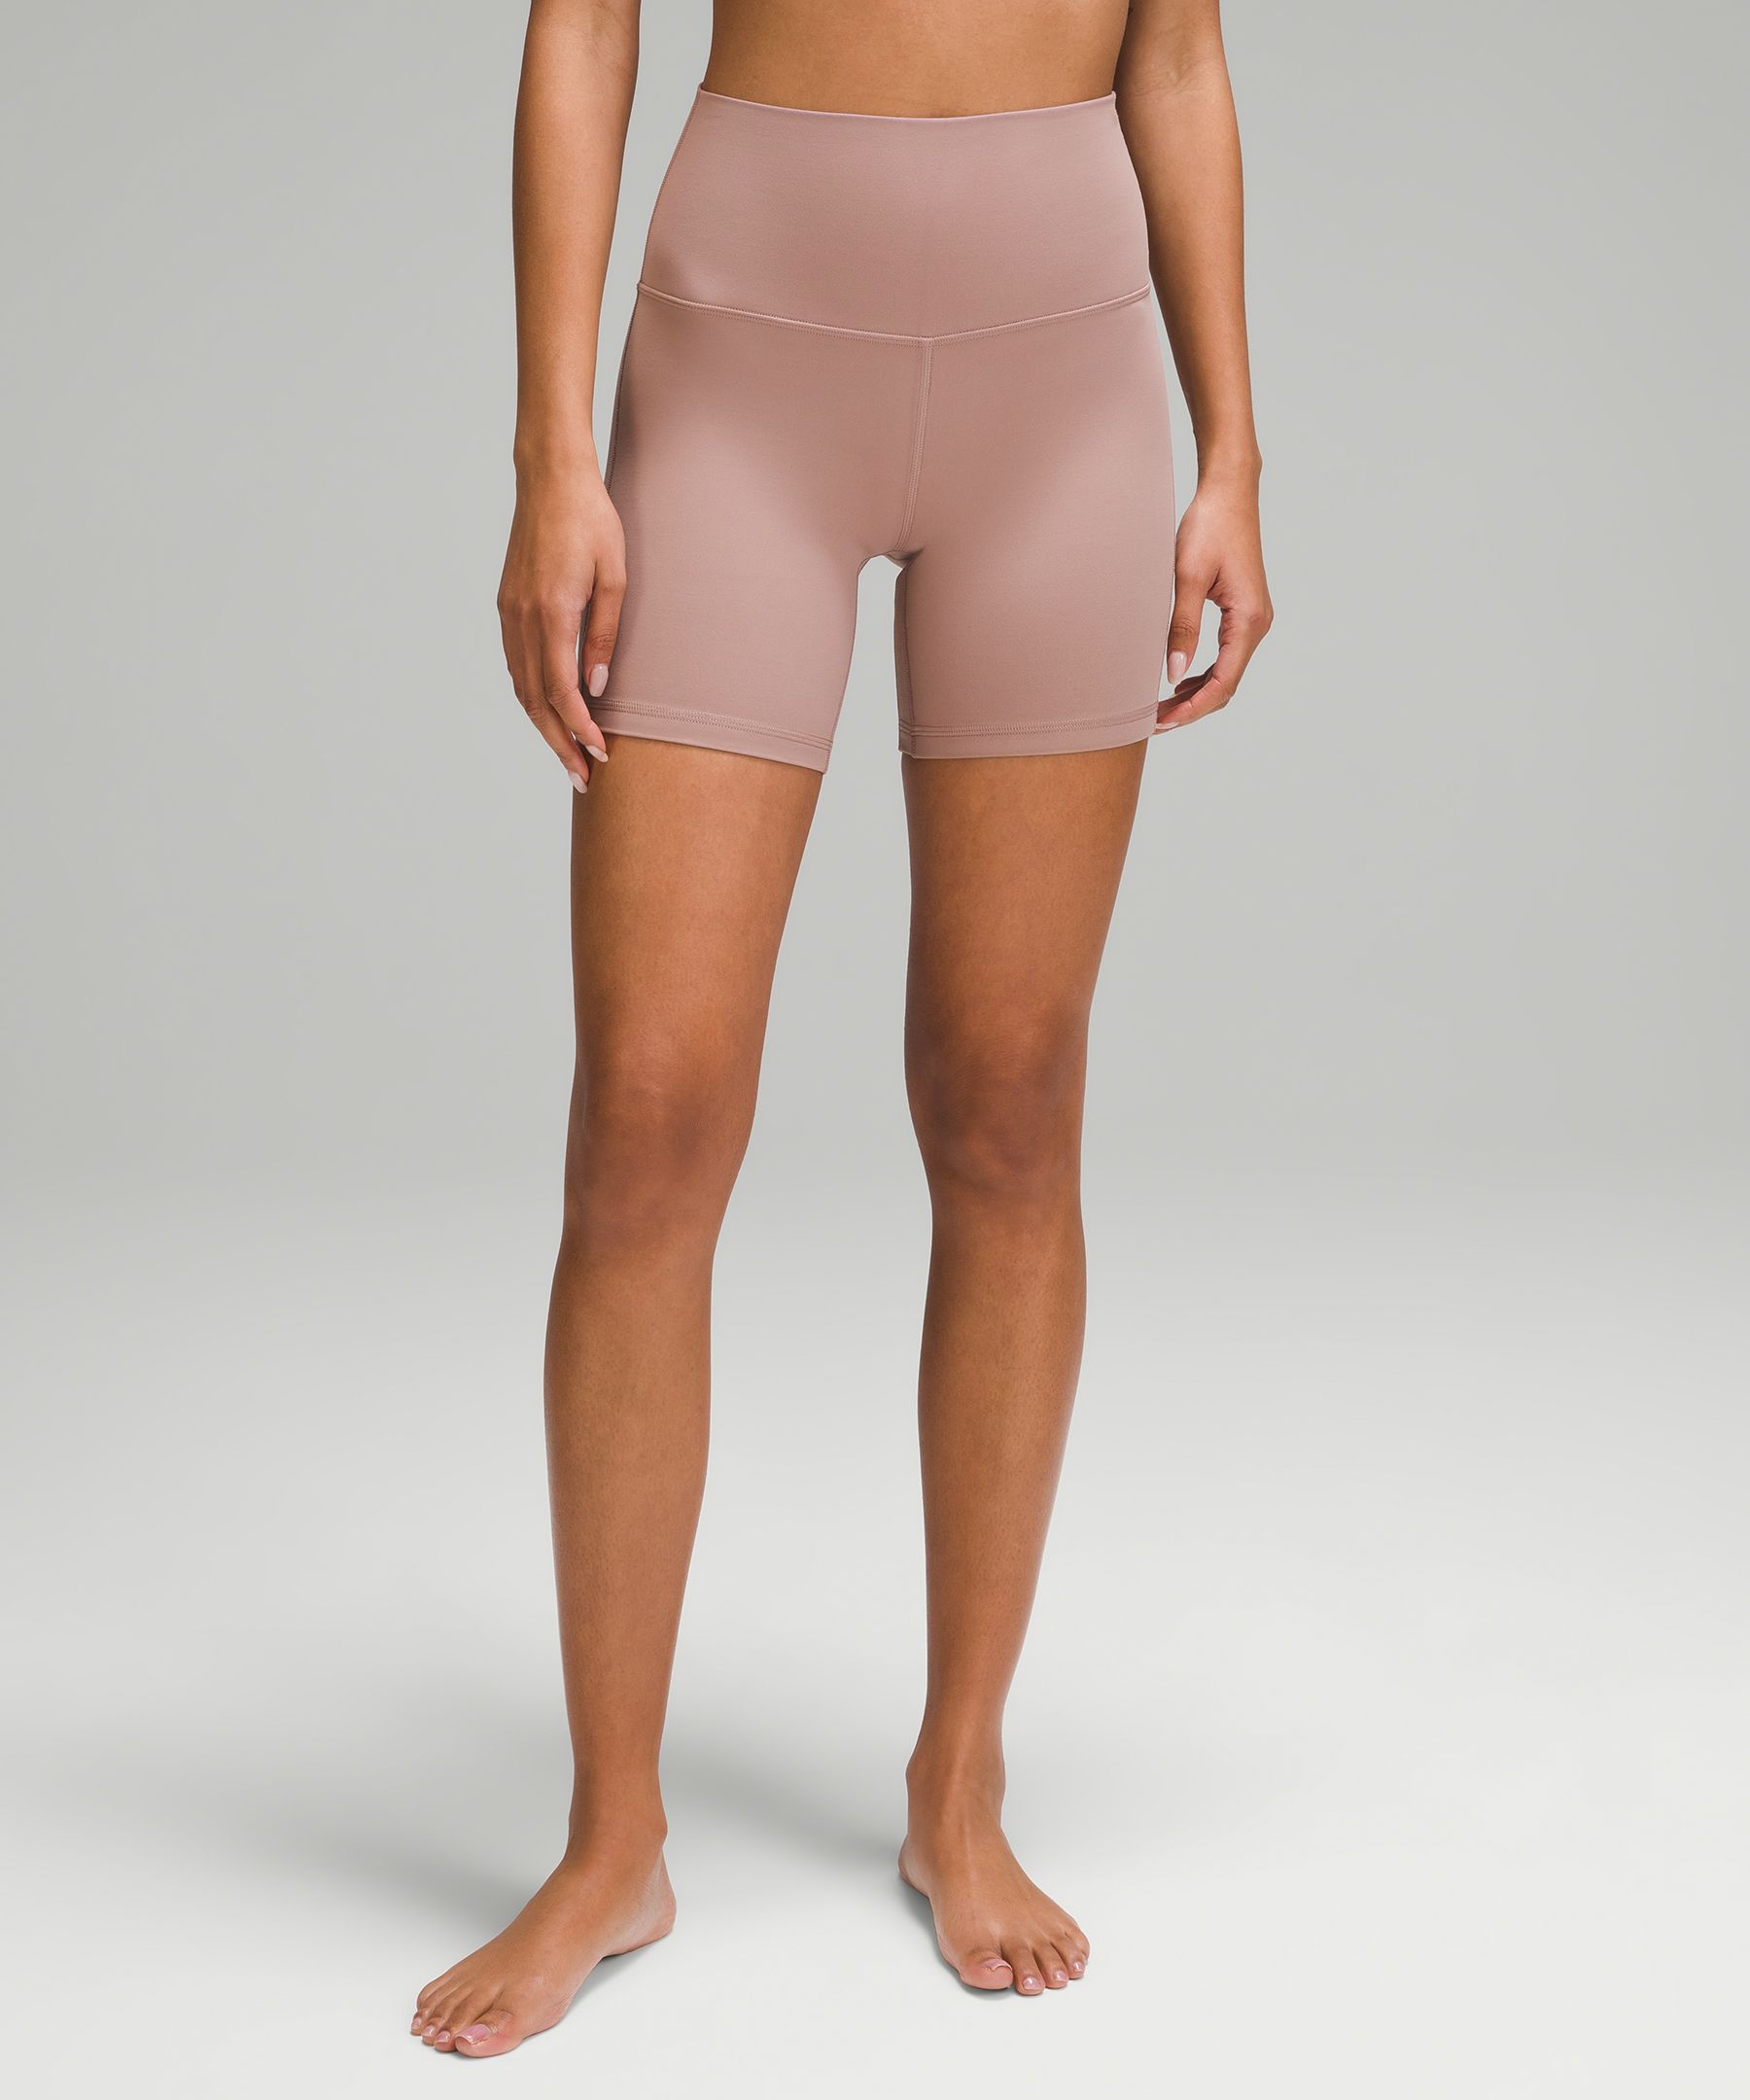 Lululemon align shorts 6” size 2 chambray, Women's Fashion